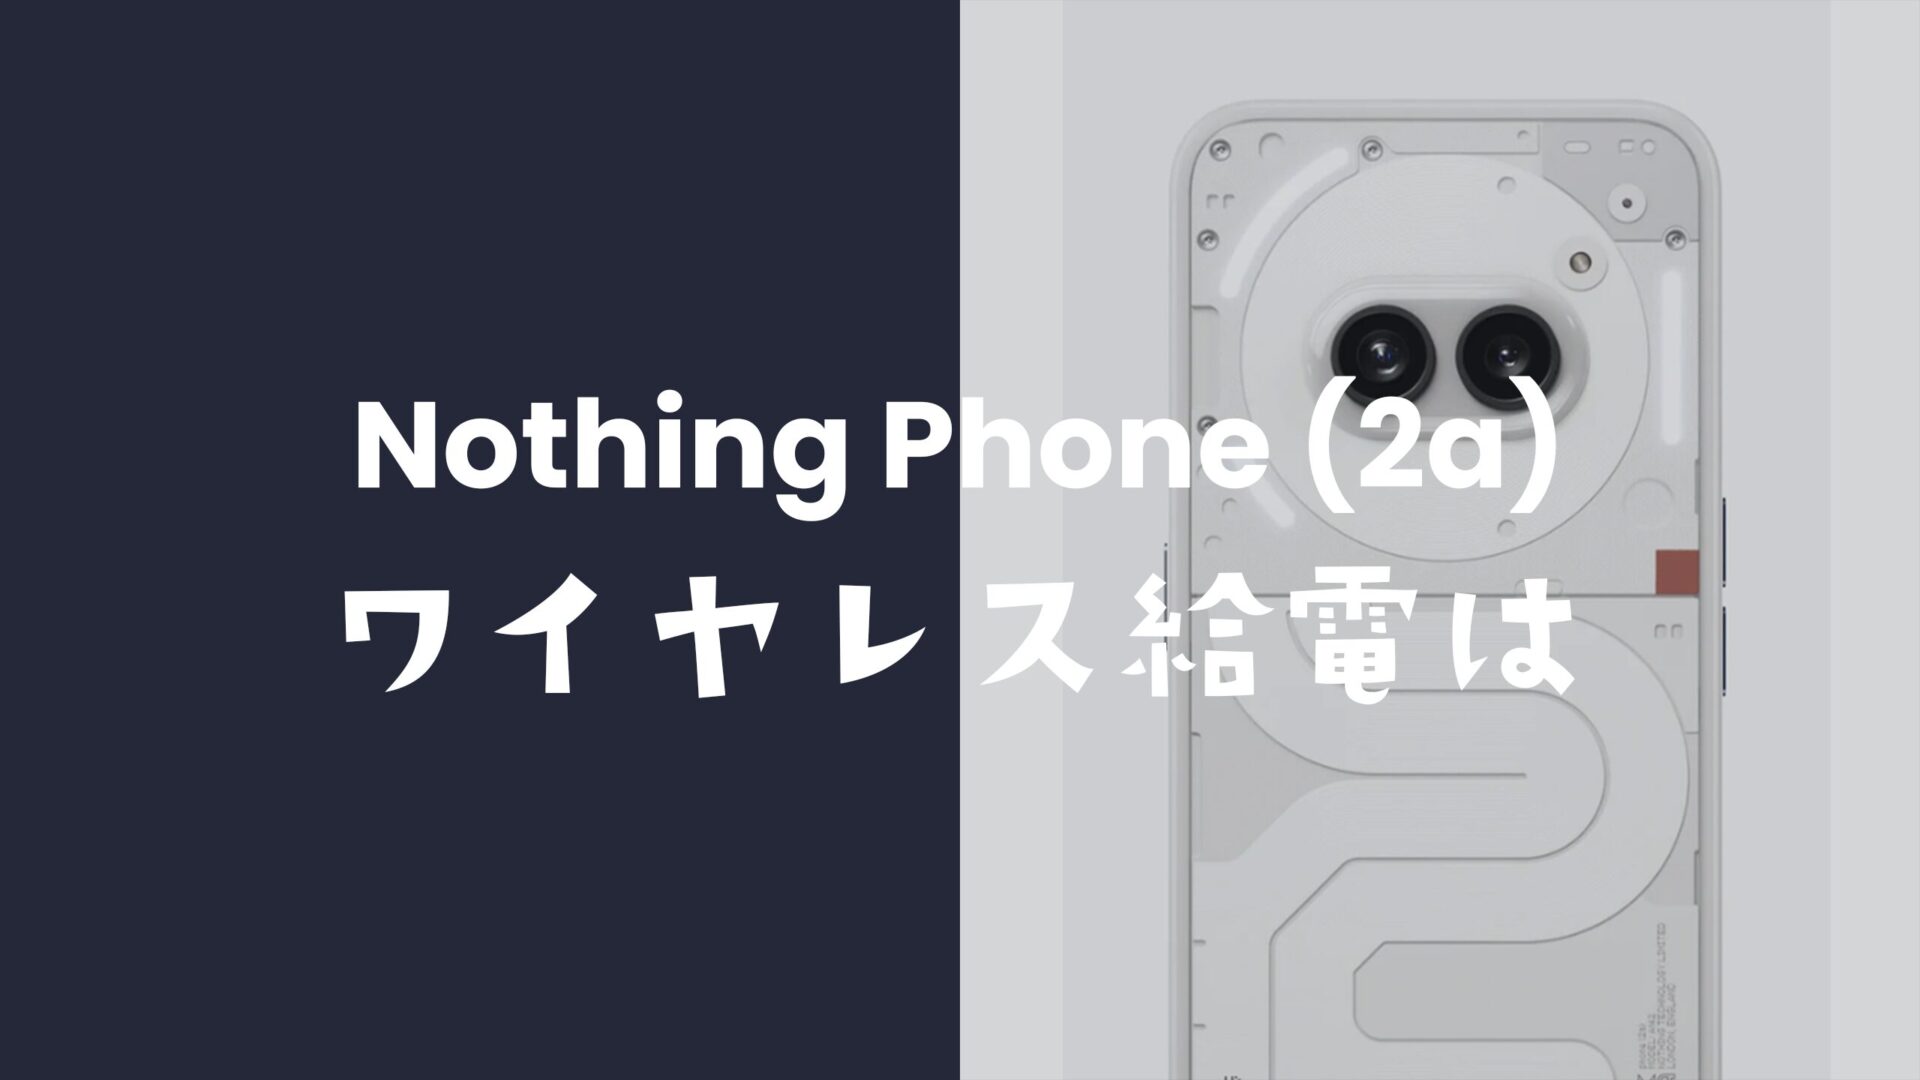 Nothing Phone (2a)はワイヤレス充電やQiに非対応。【ナッシングフォン】のサムネイル画像